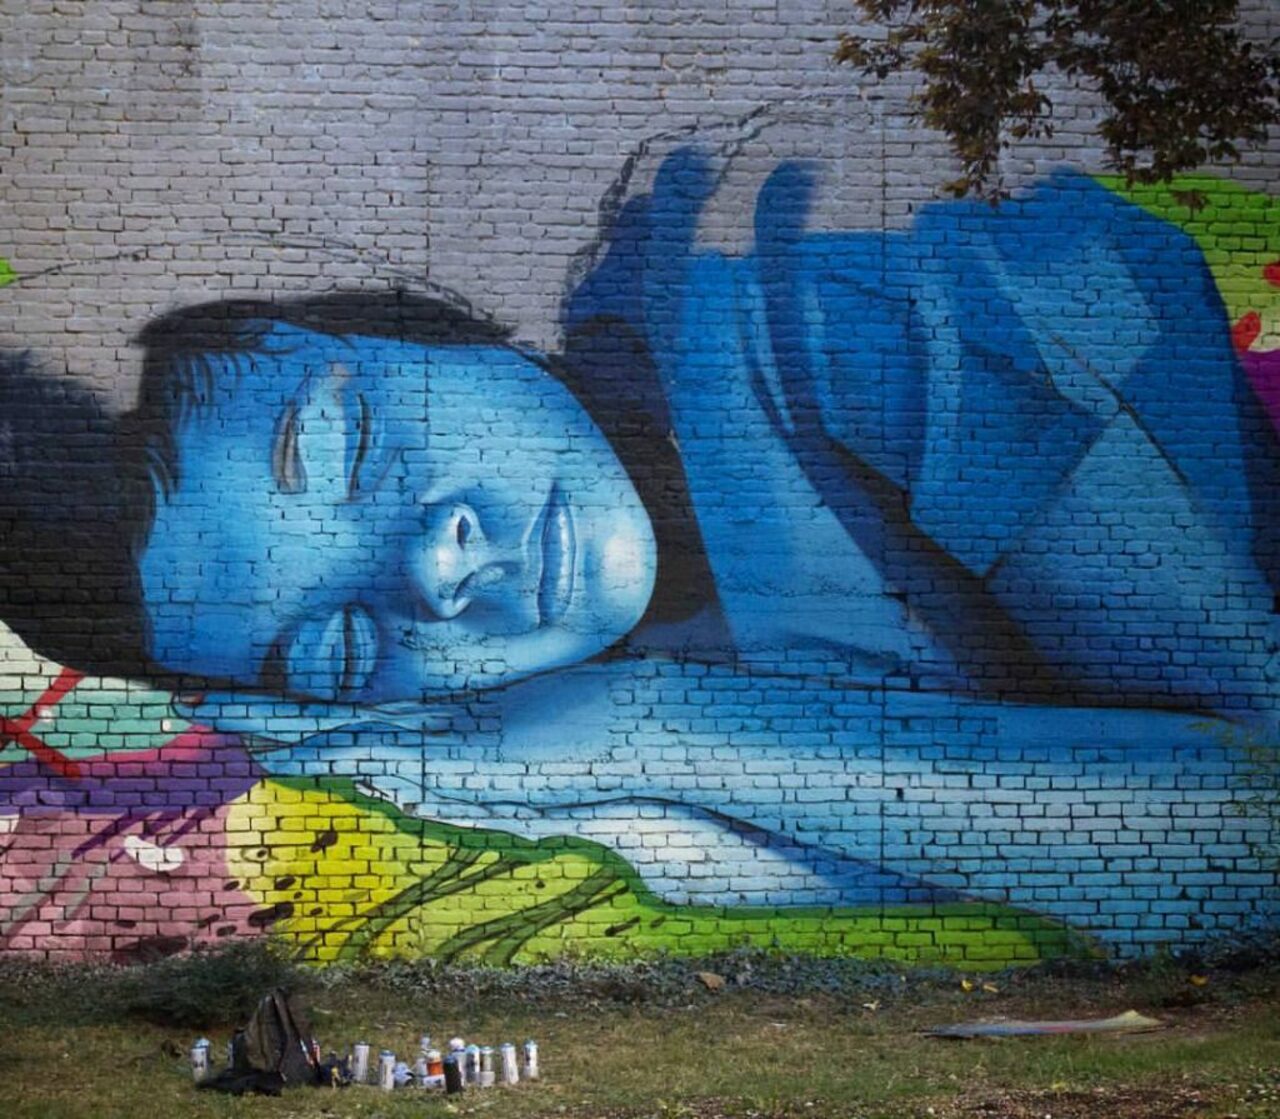 “Technicolor Dream” by Lonac & Chez 186 in Zagreb, Croatia http://buff.ly/2eI9UXE #streetart #mural #graffiti https://t.co/EtX3chMNzX